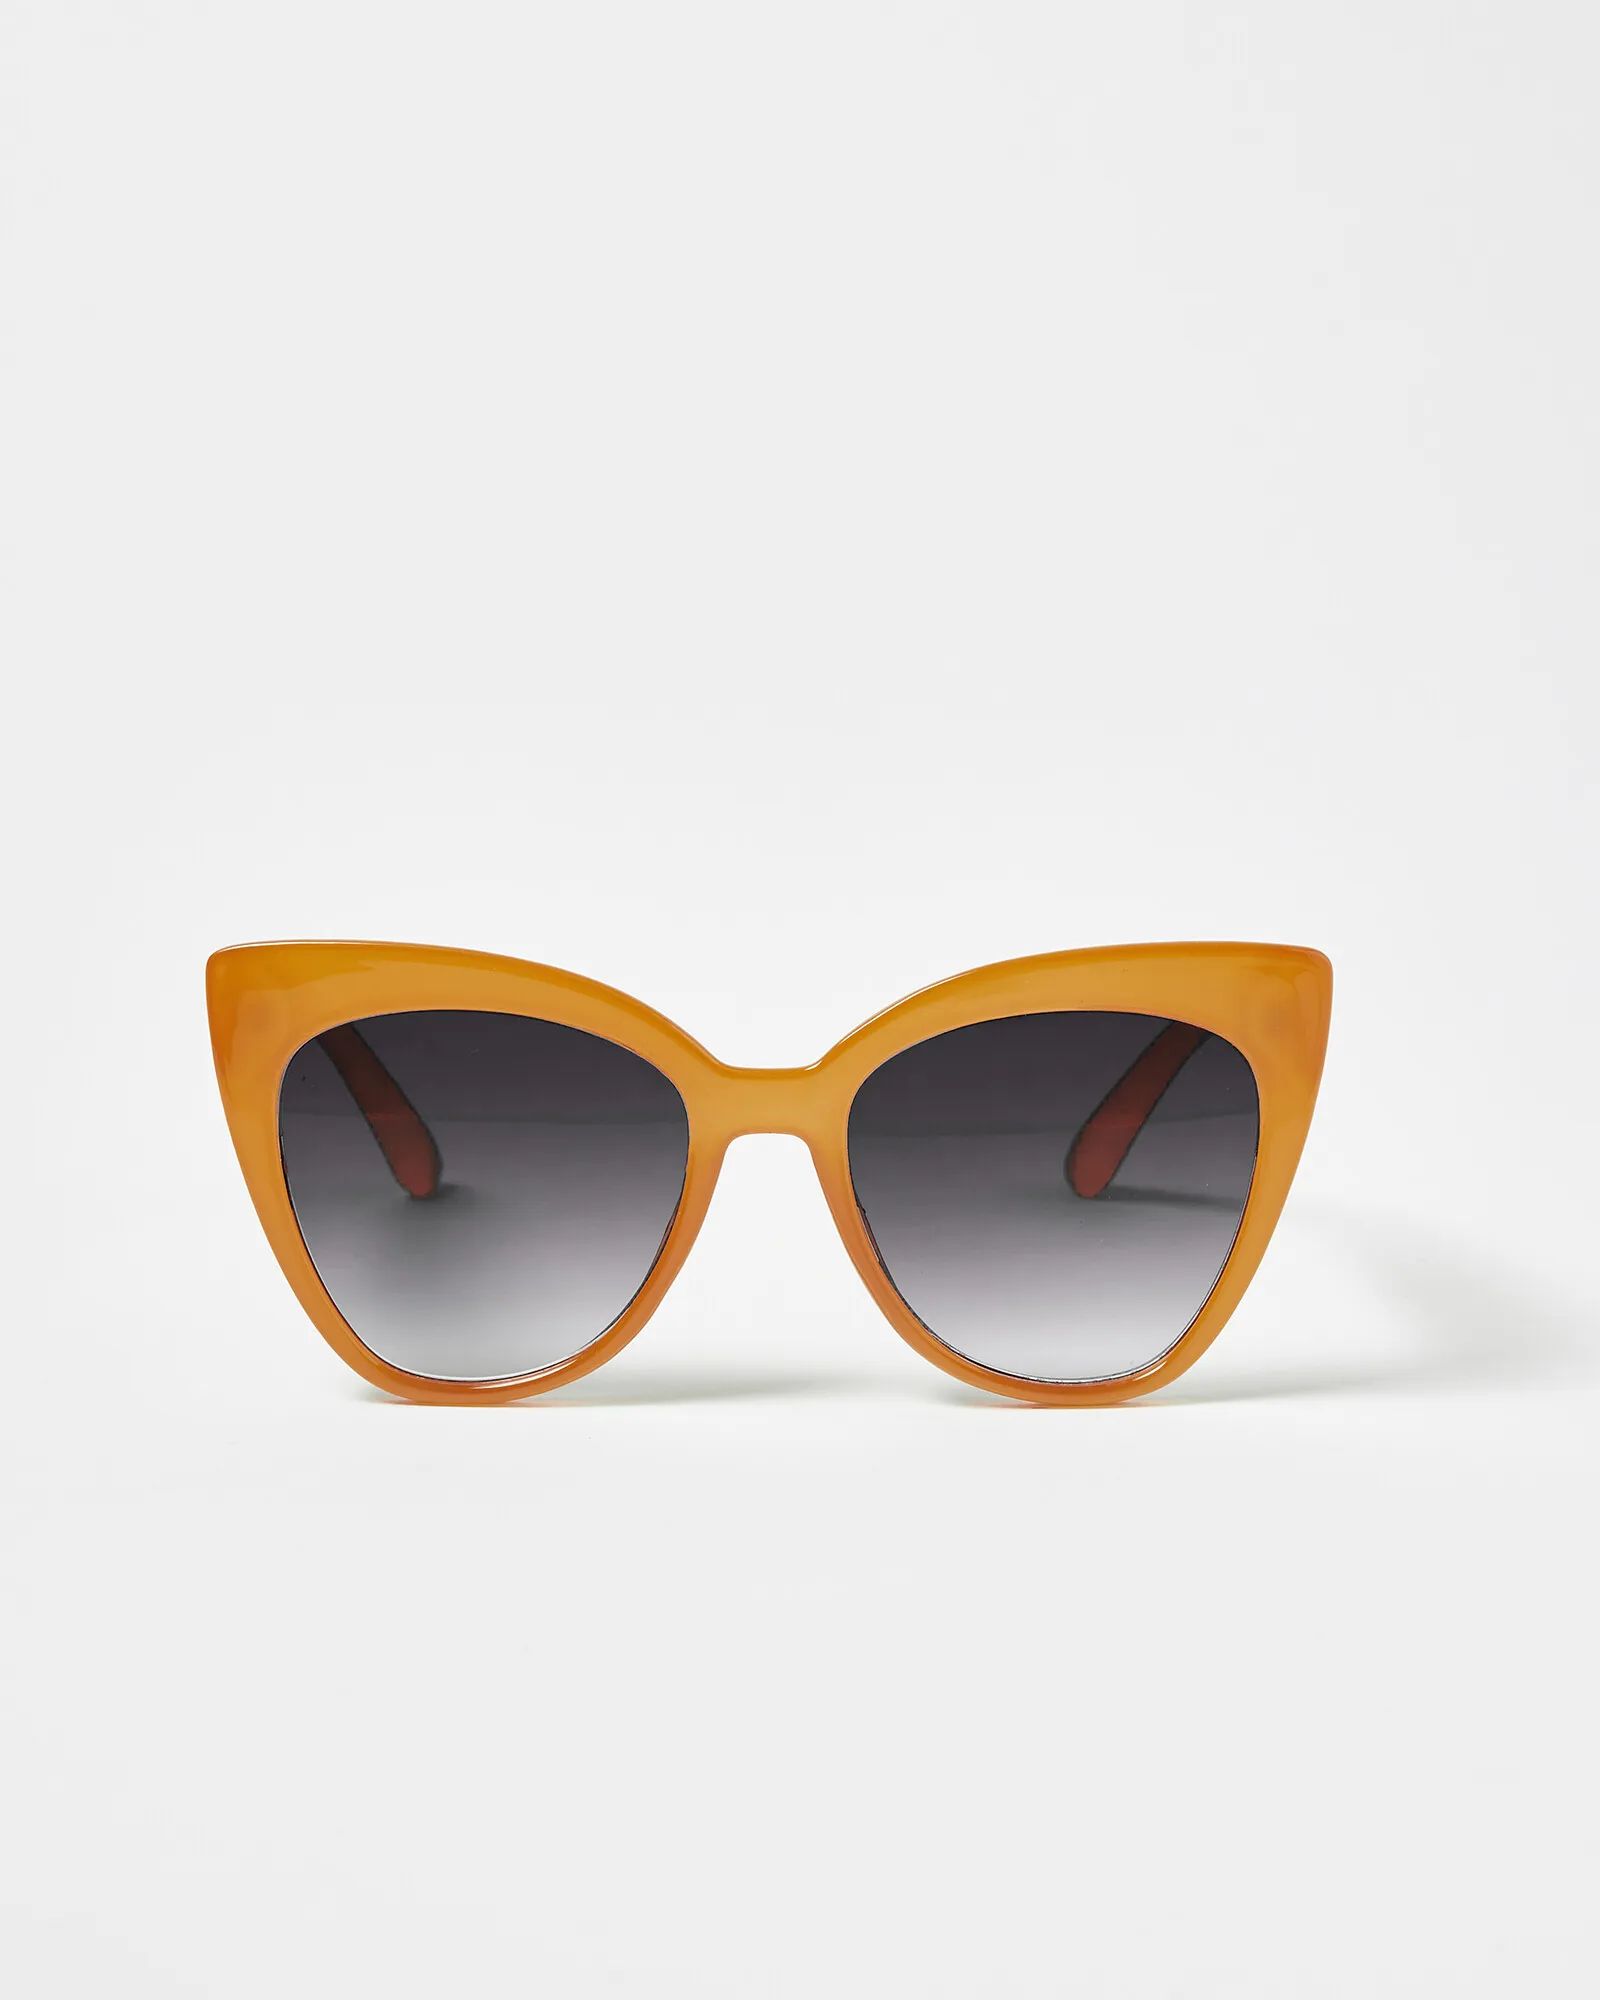 Cateye Sunglasses | Oliver Bonas (Global)